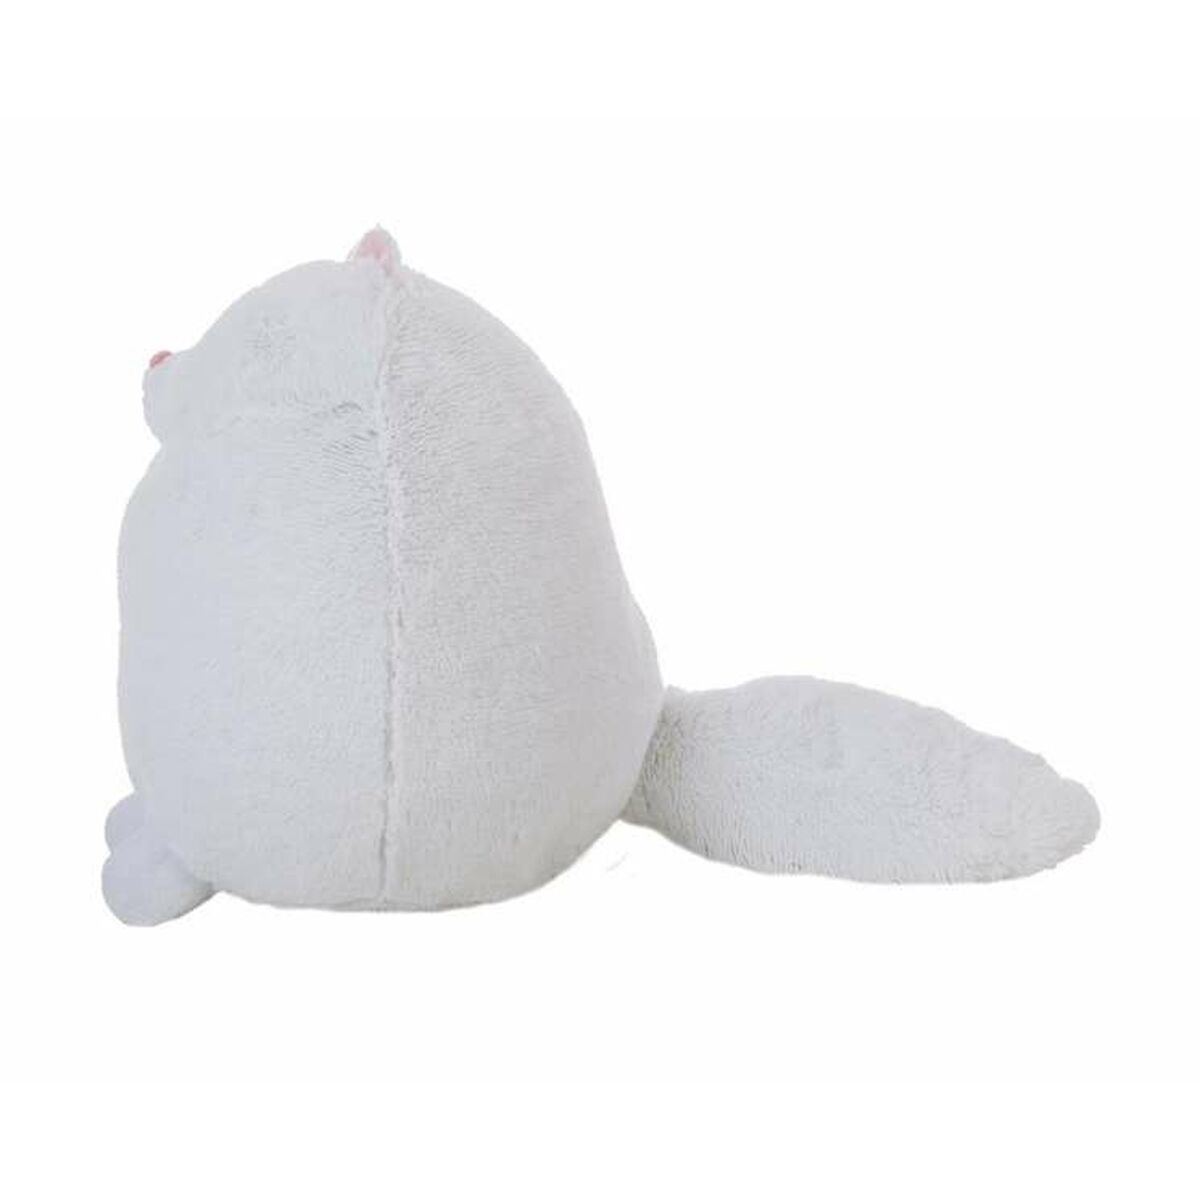 Fluffy toy Gordi Cat 42 cm